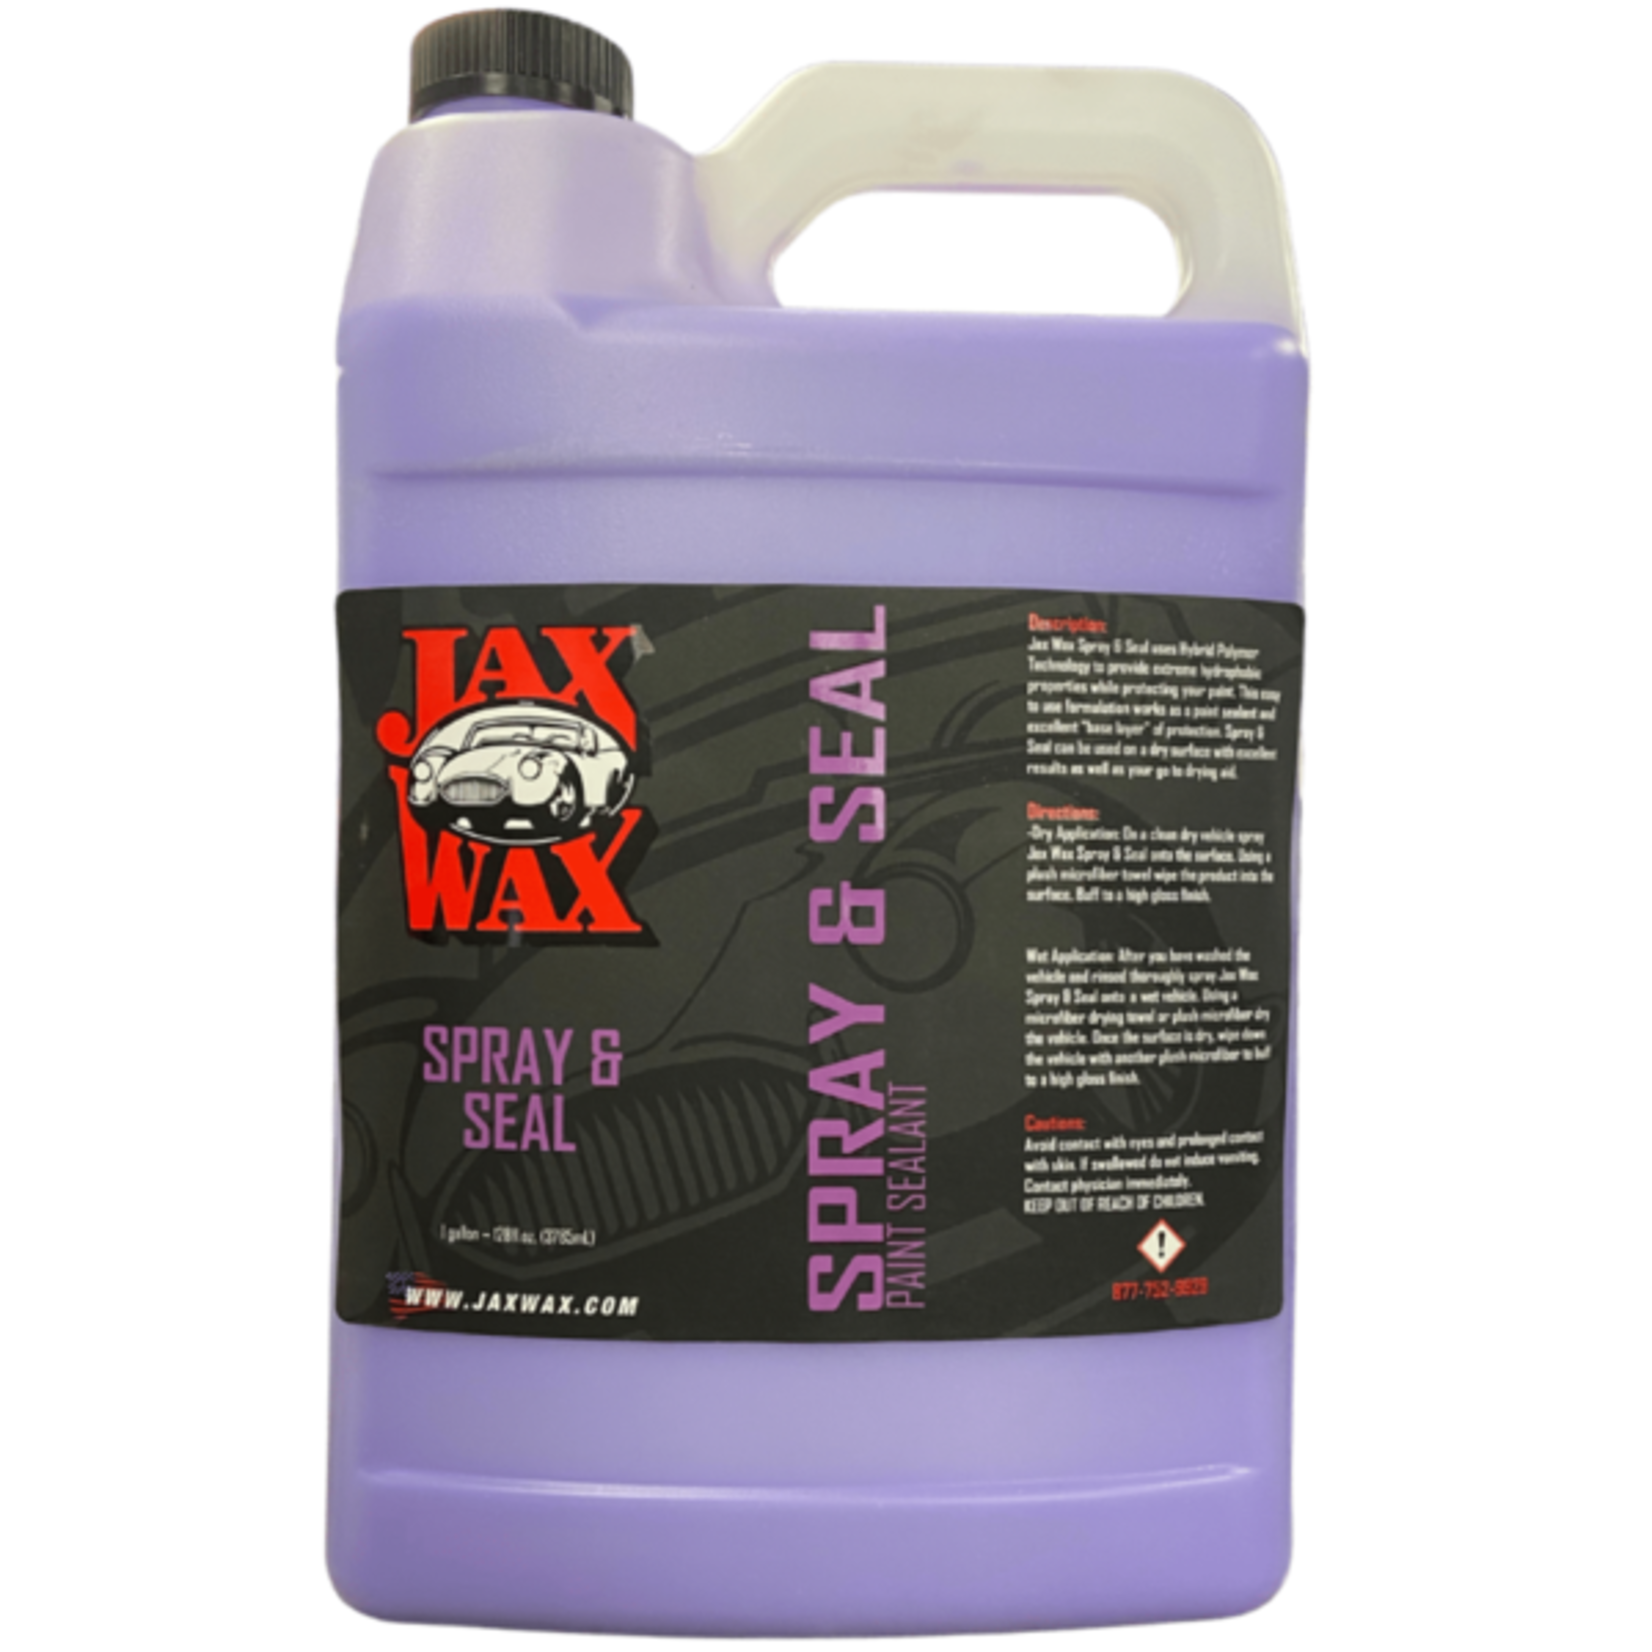 Jax Wax Spray and Seal Paint Sealant (Gallon)